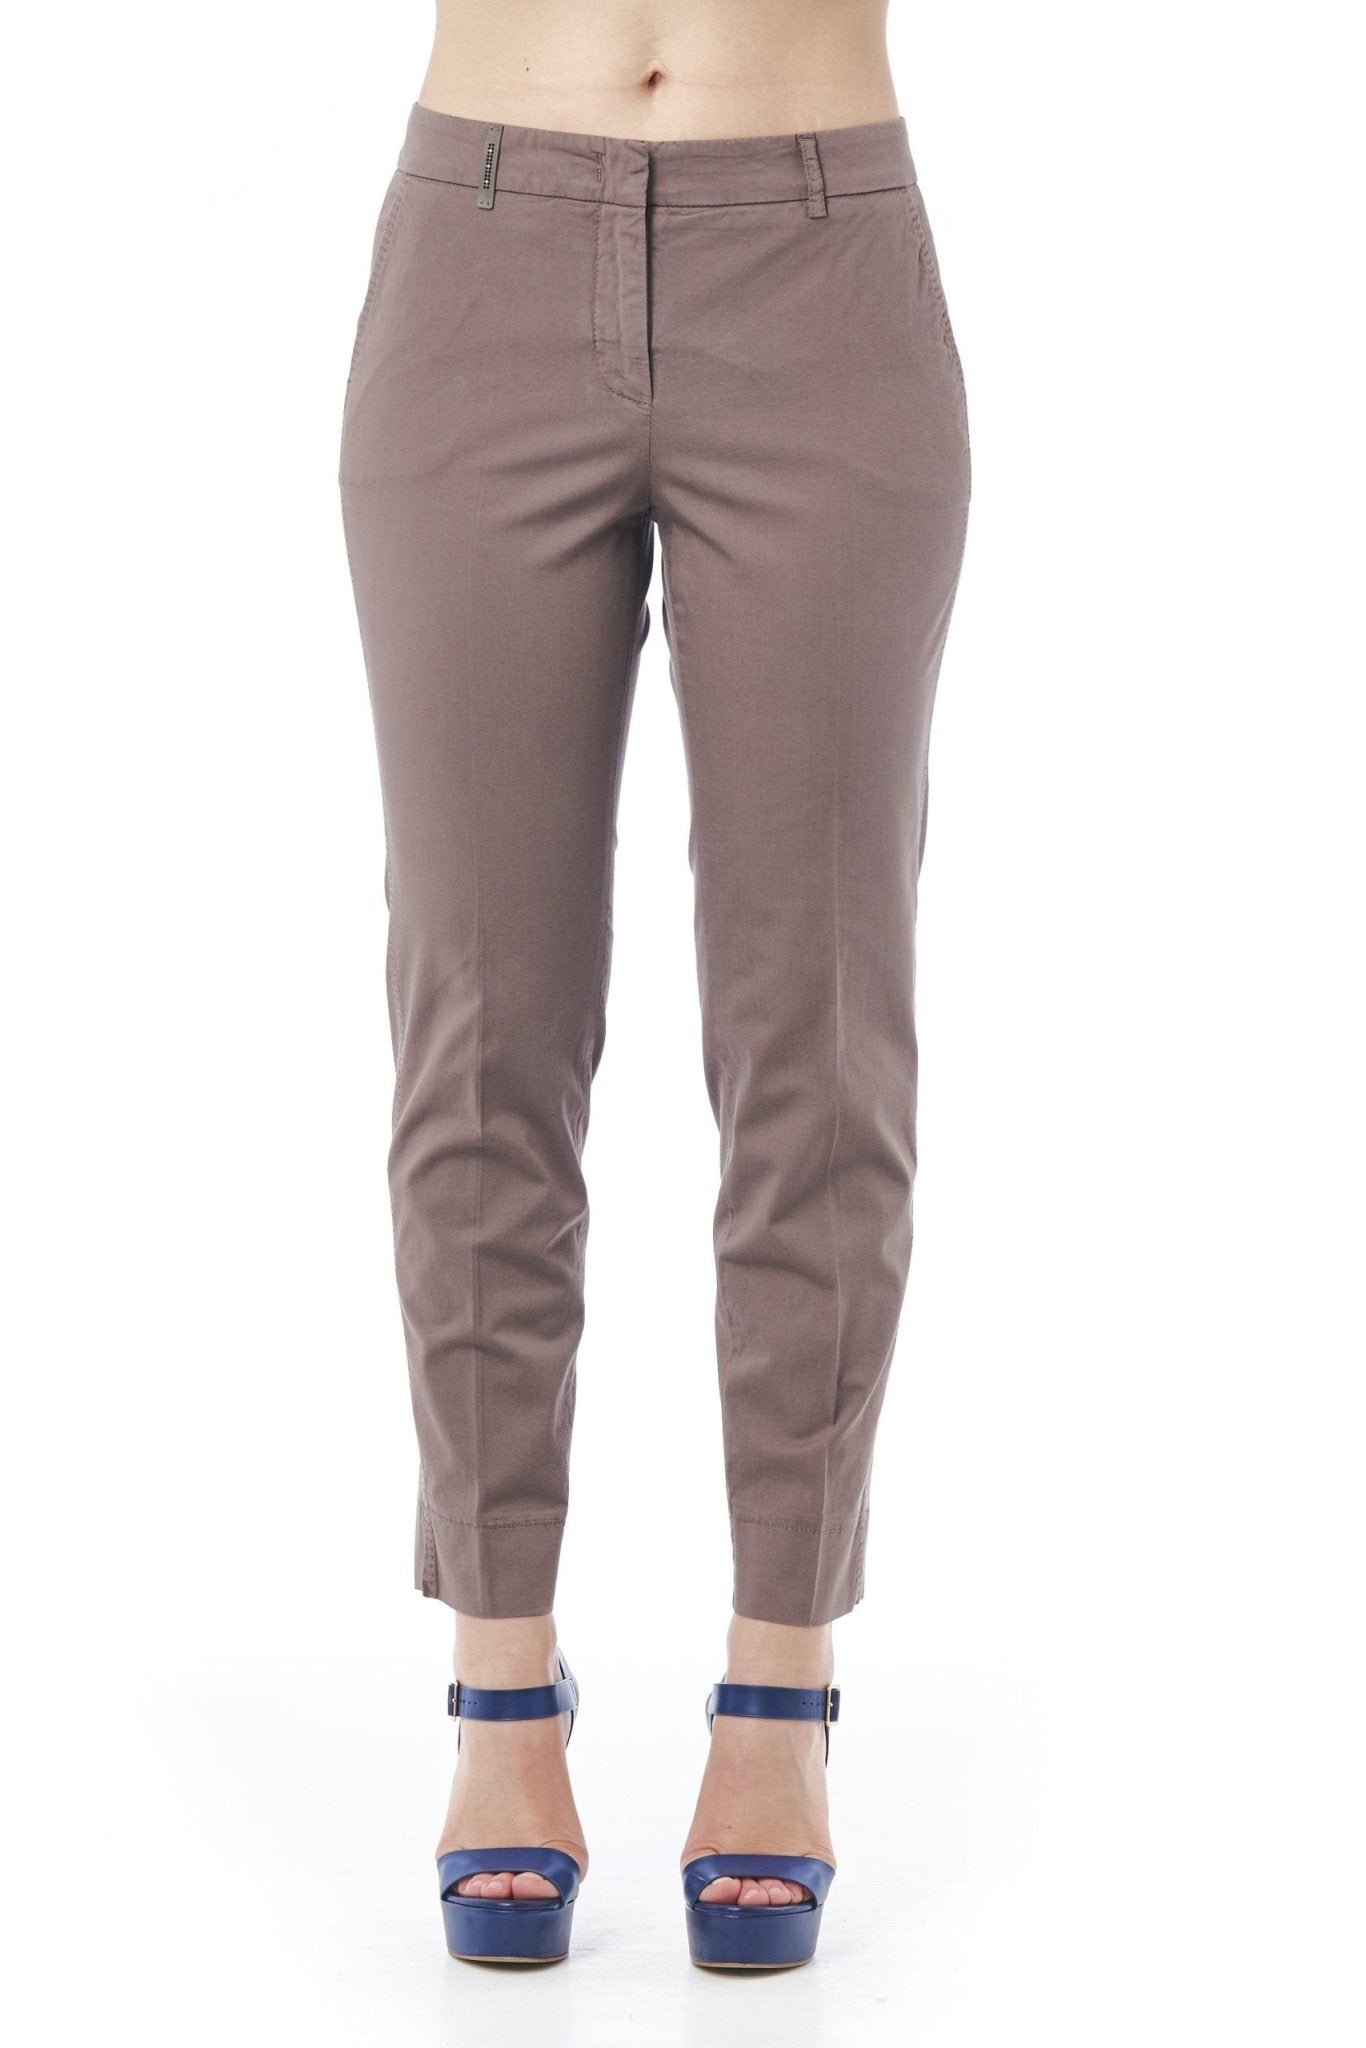 Peserico Brown Cotton Jeans & Pant - Fizigo